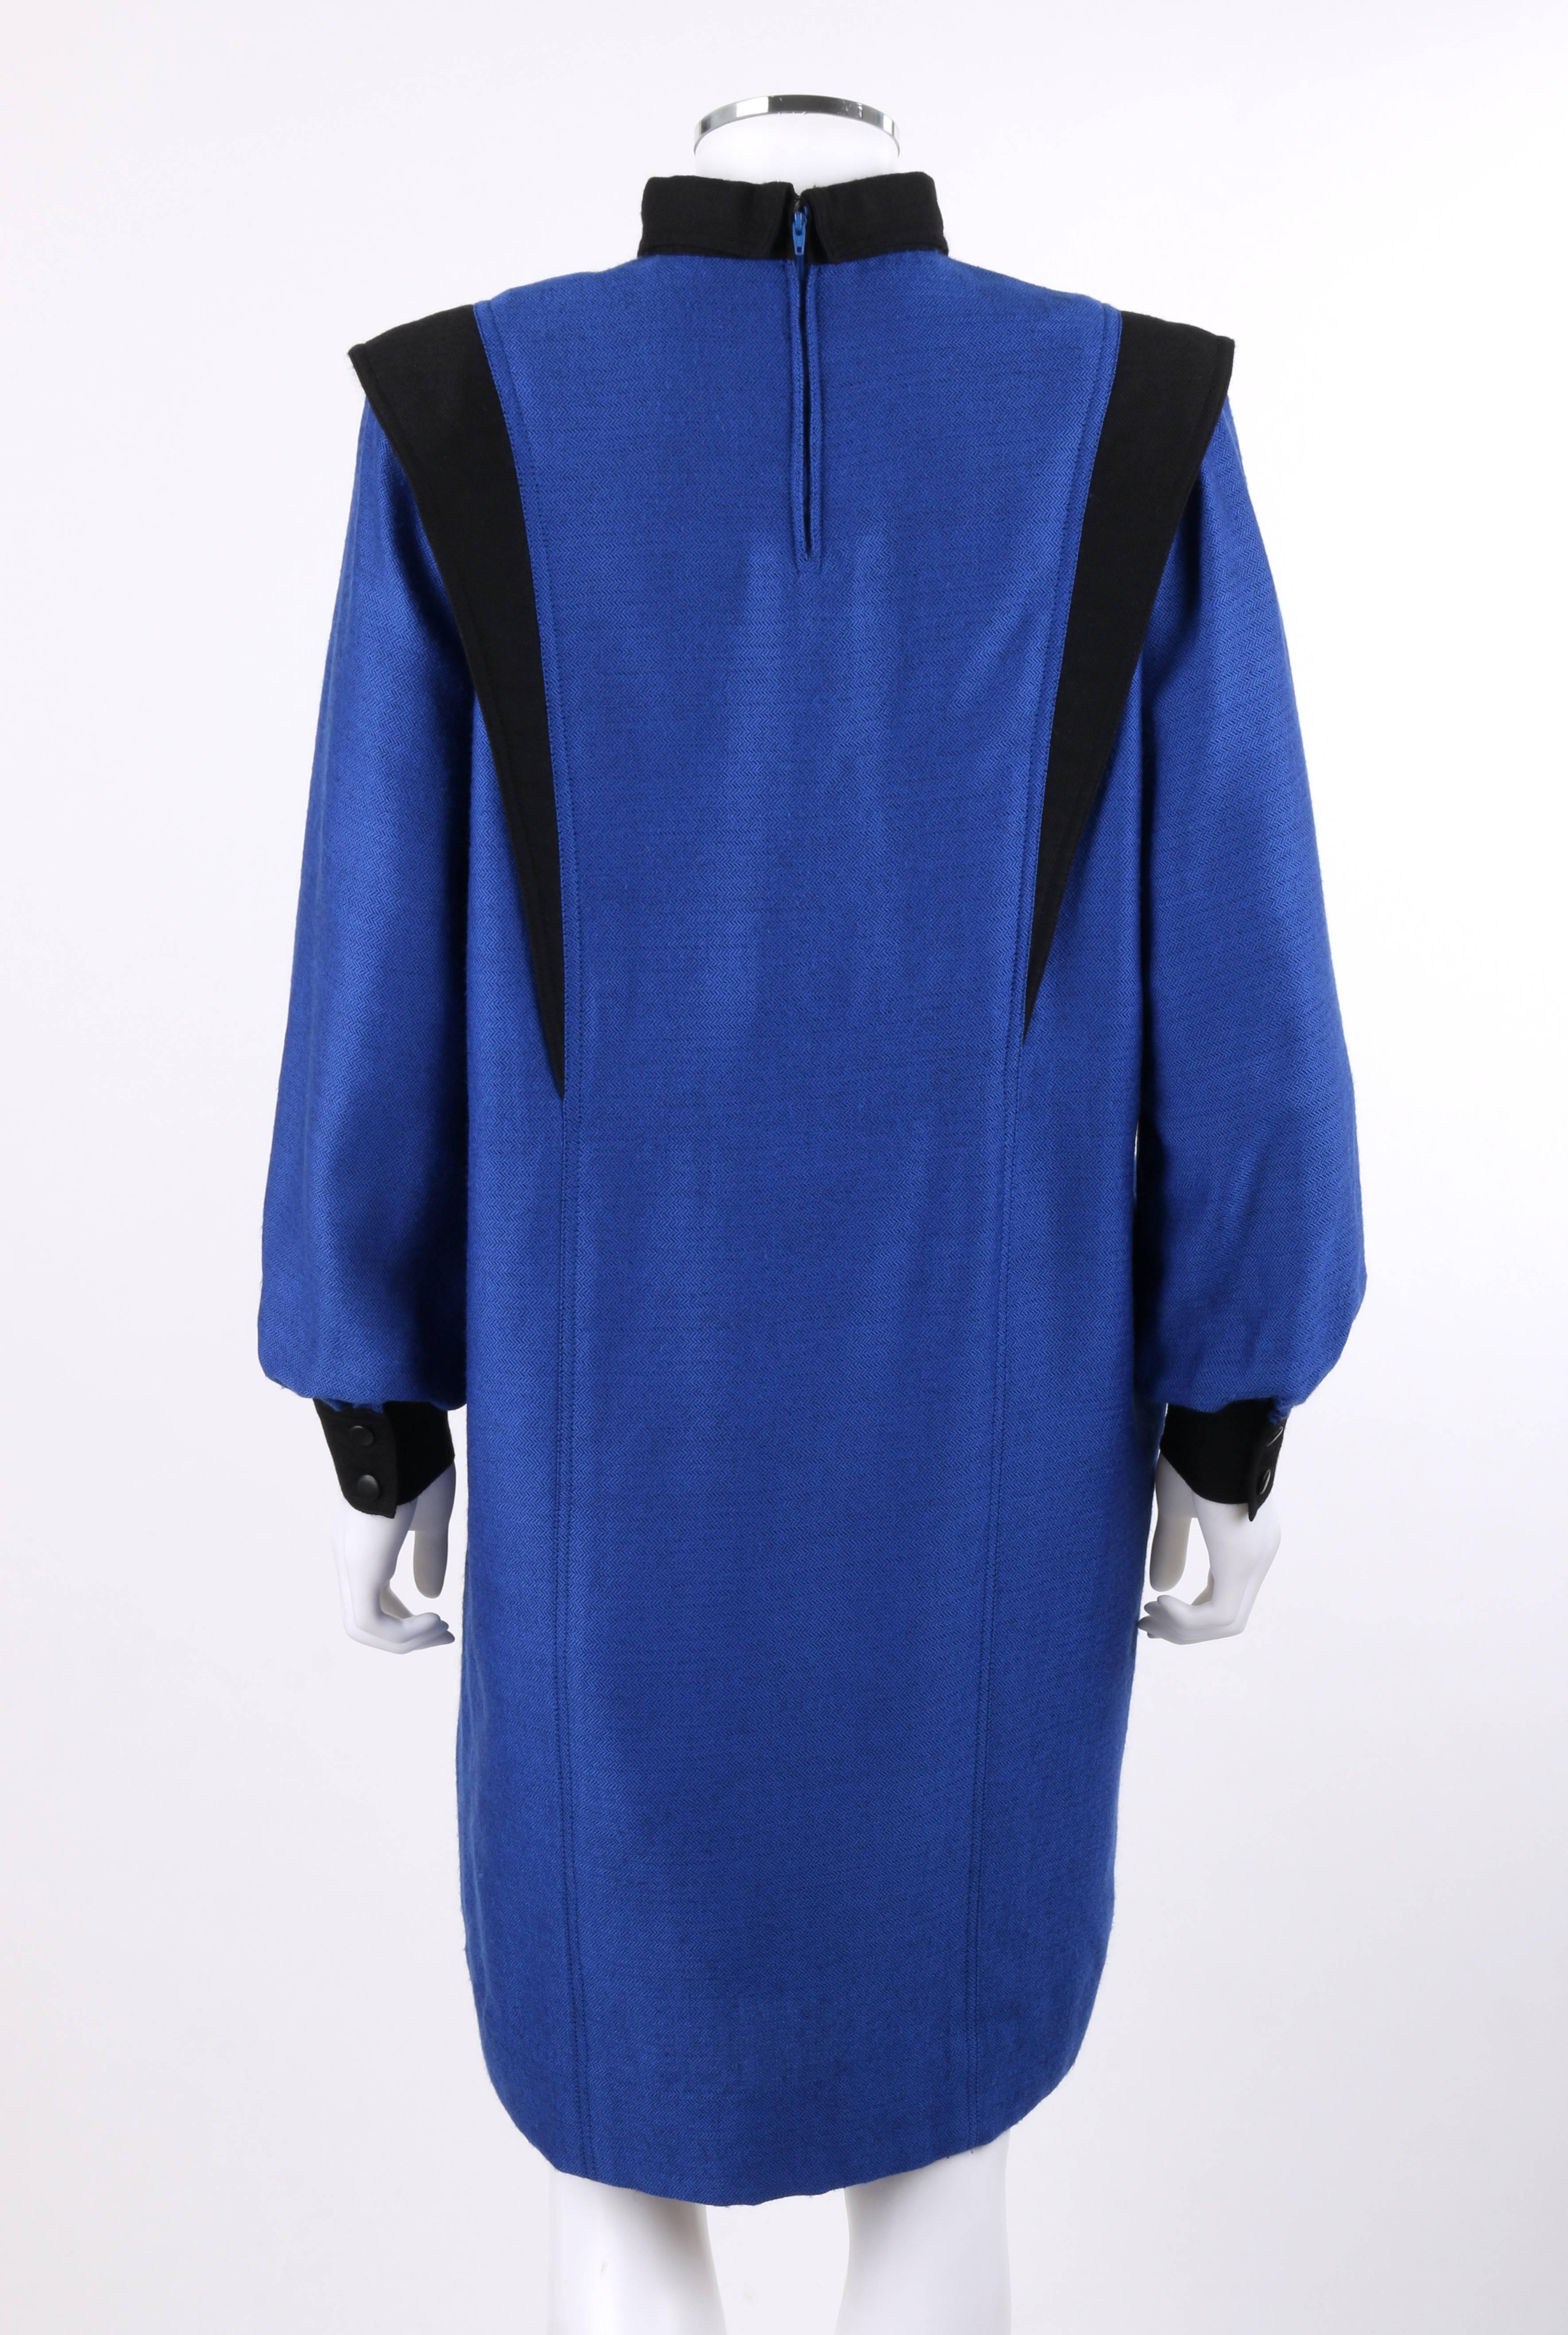 Women's BALENCIAGA c.1980's Blue & Black Wool Herringbone Bishop Sleeve Shift Dress